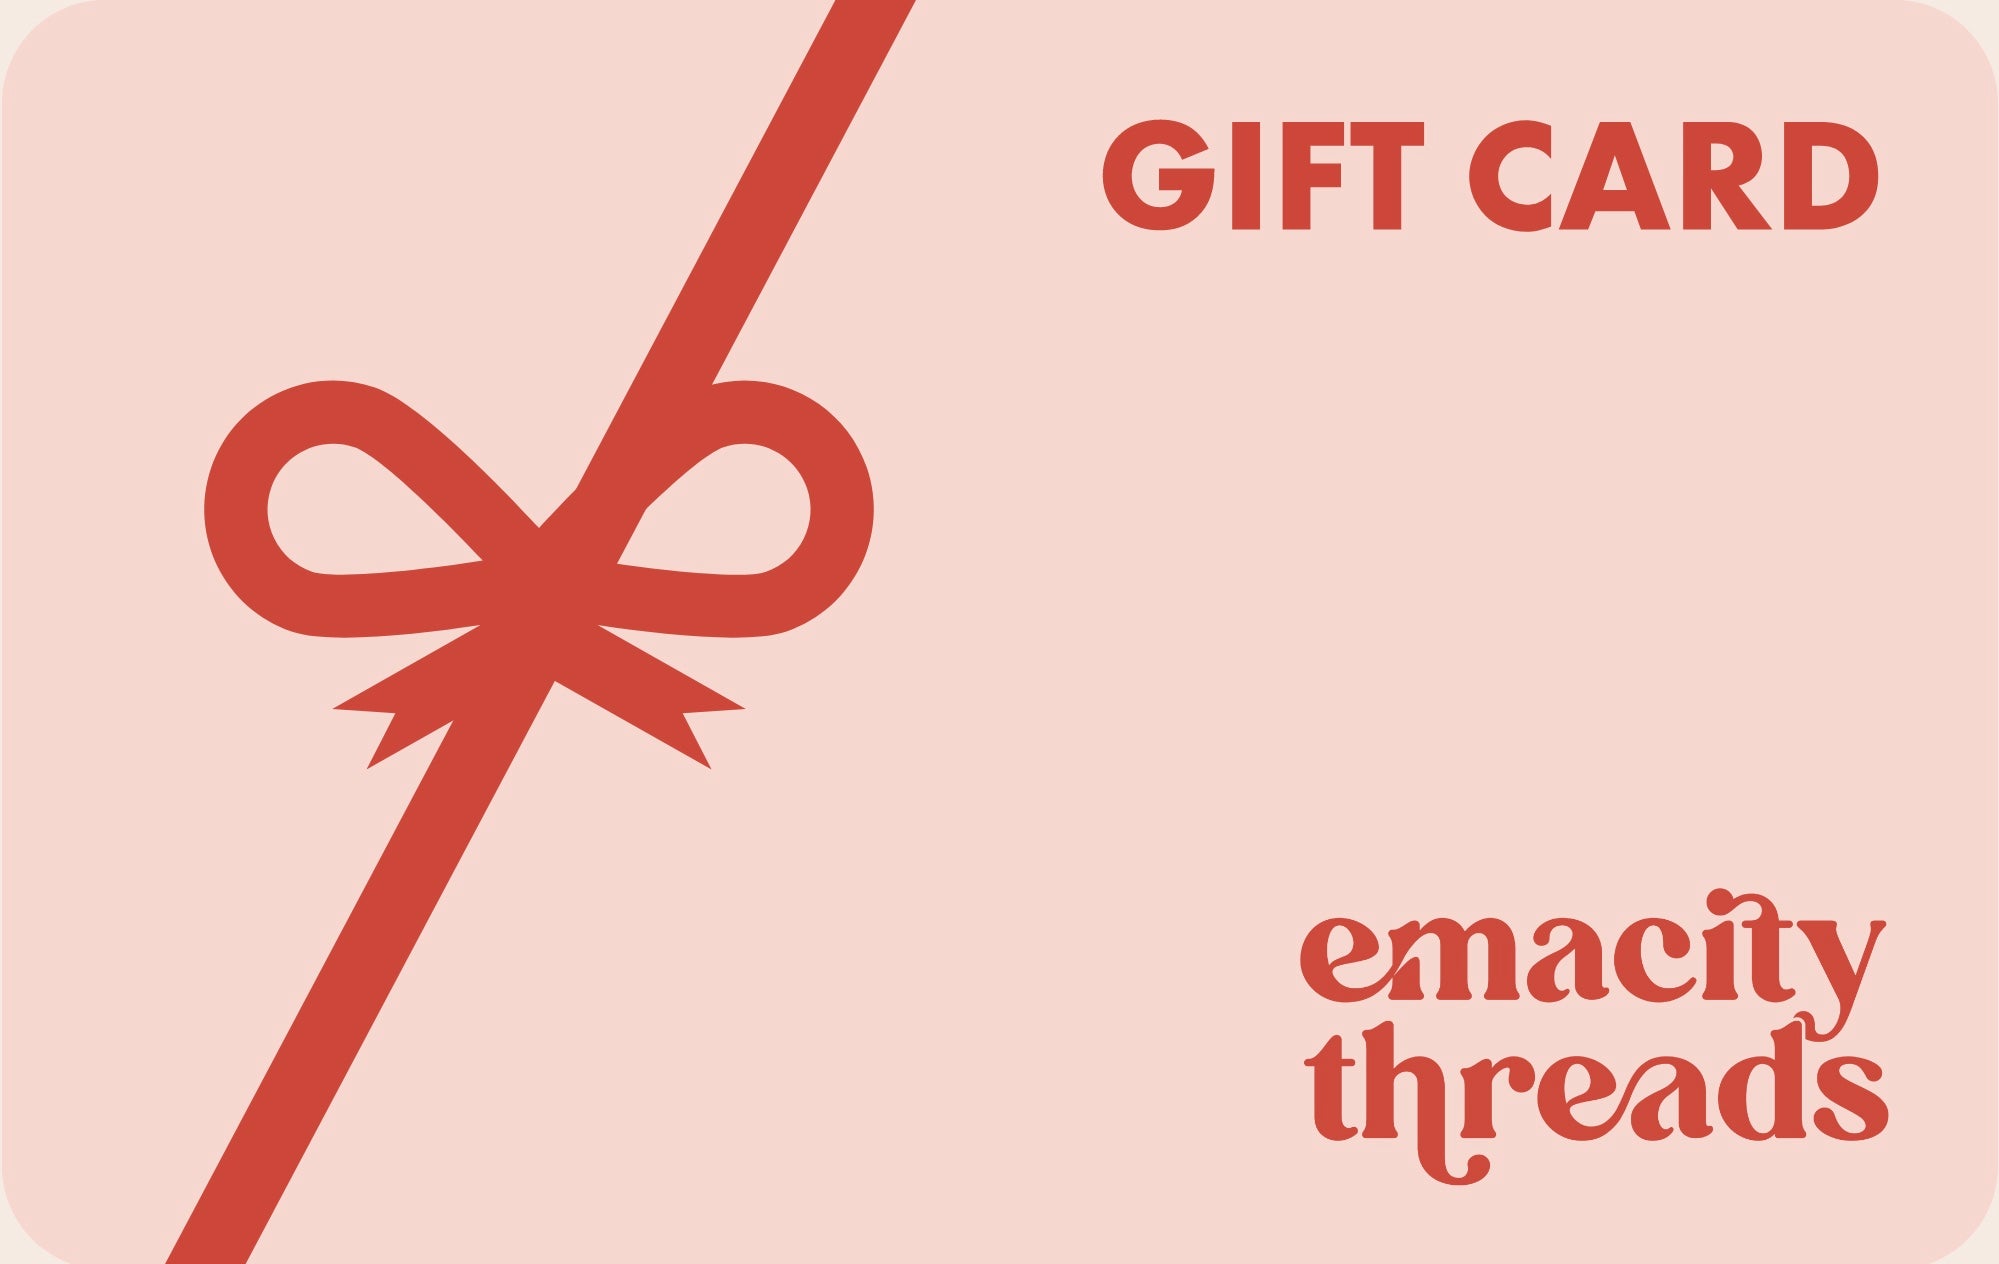 Emacity Threads Gift Card - Emacity Threads